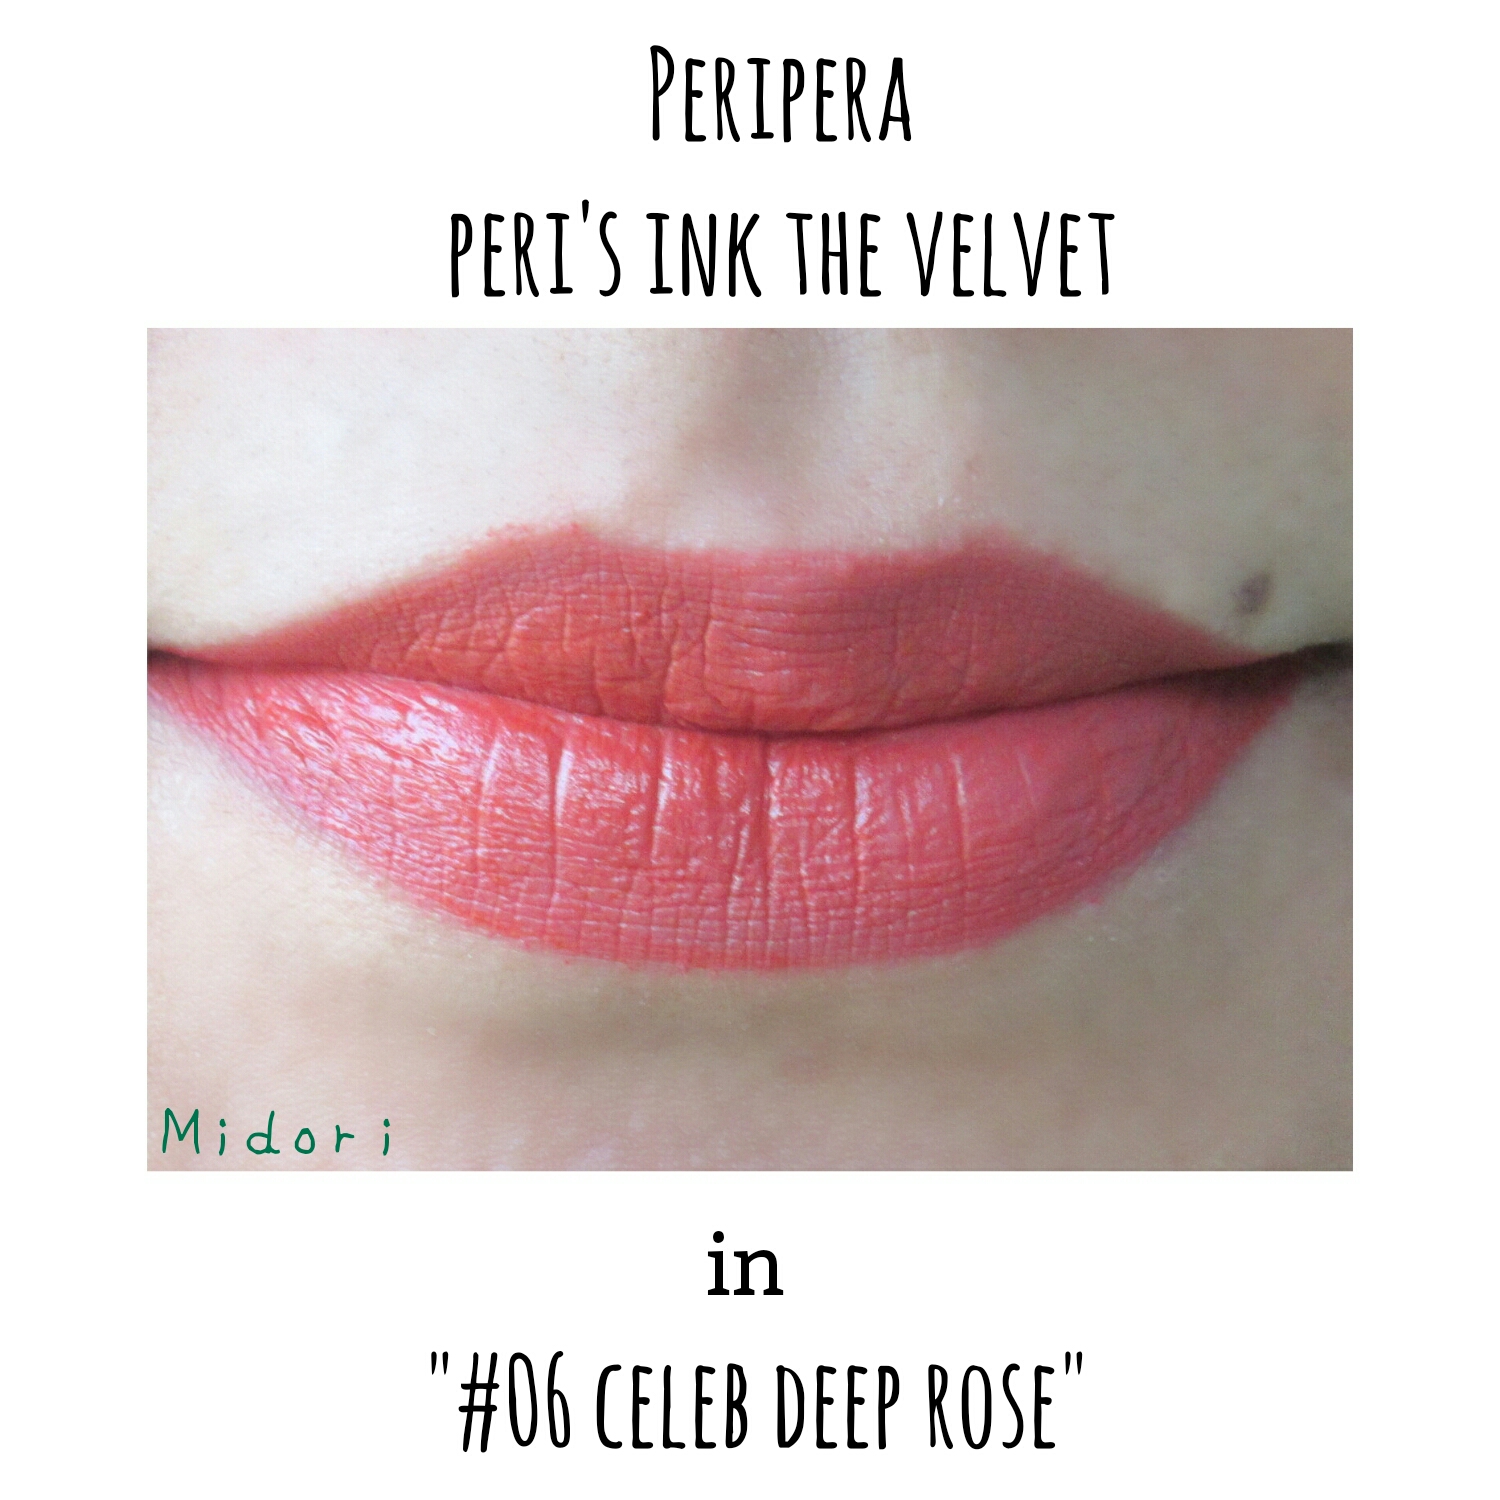 Peripera peri's ink velvet celeb deep rose